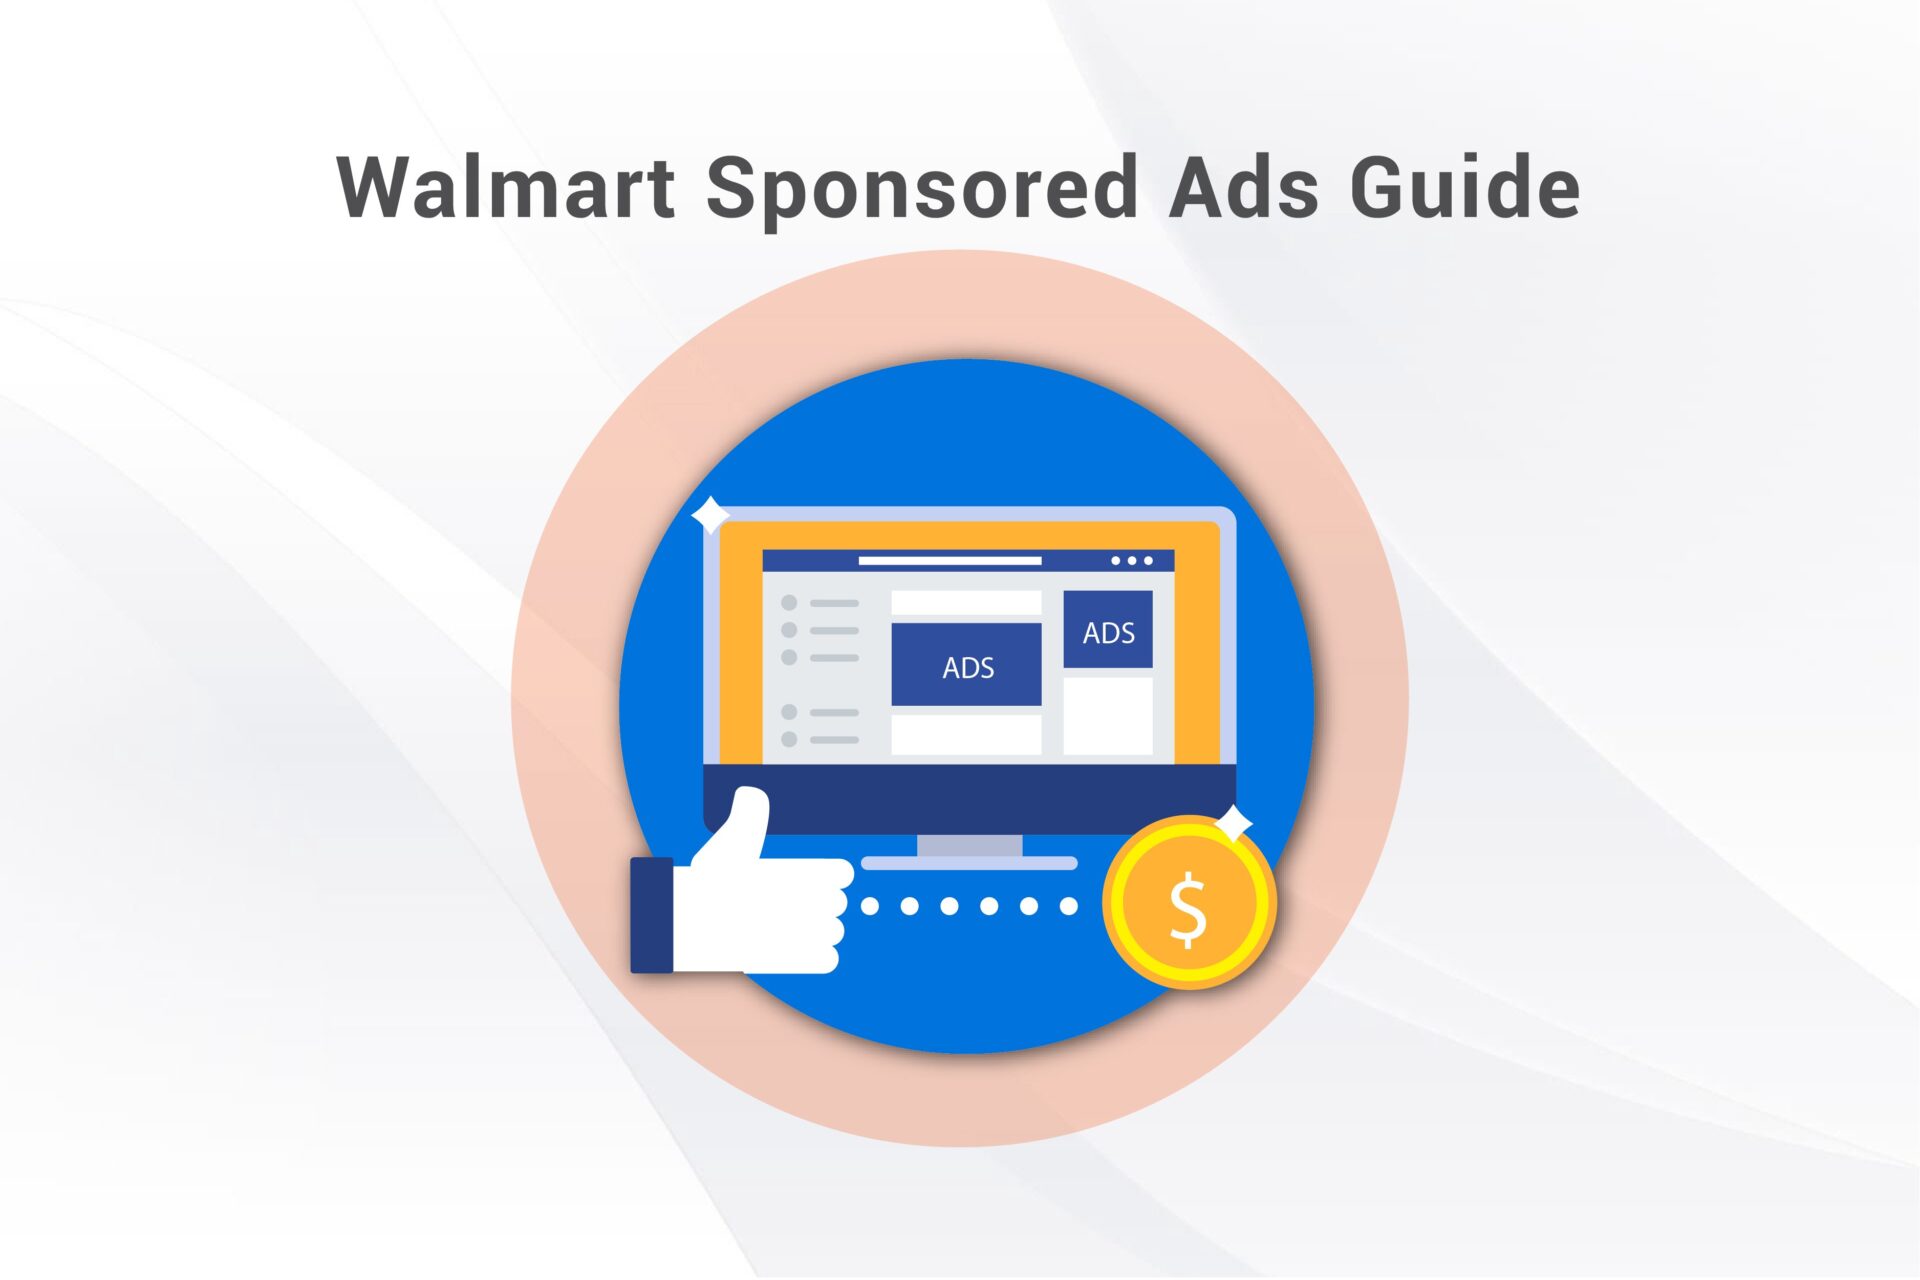 Walmart sponsored ads